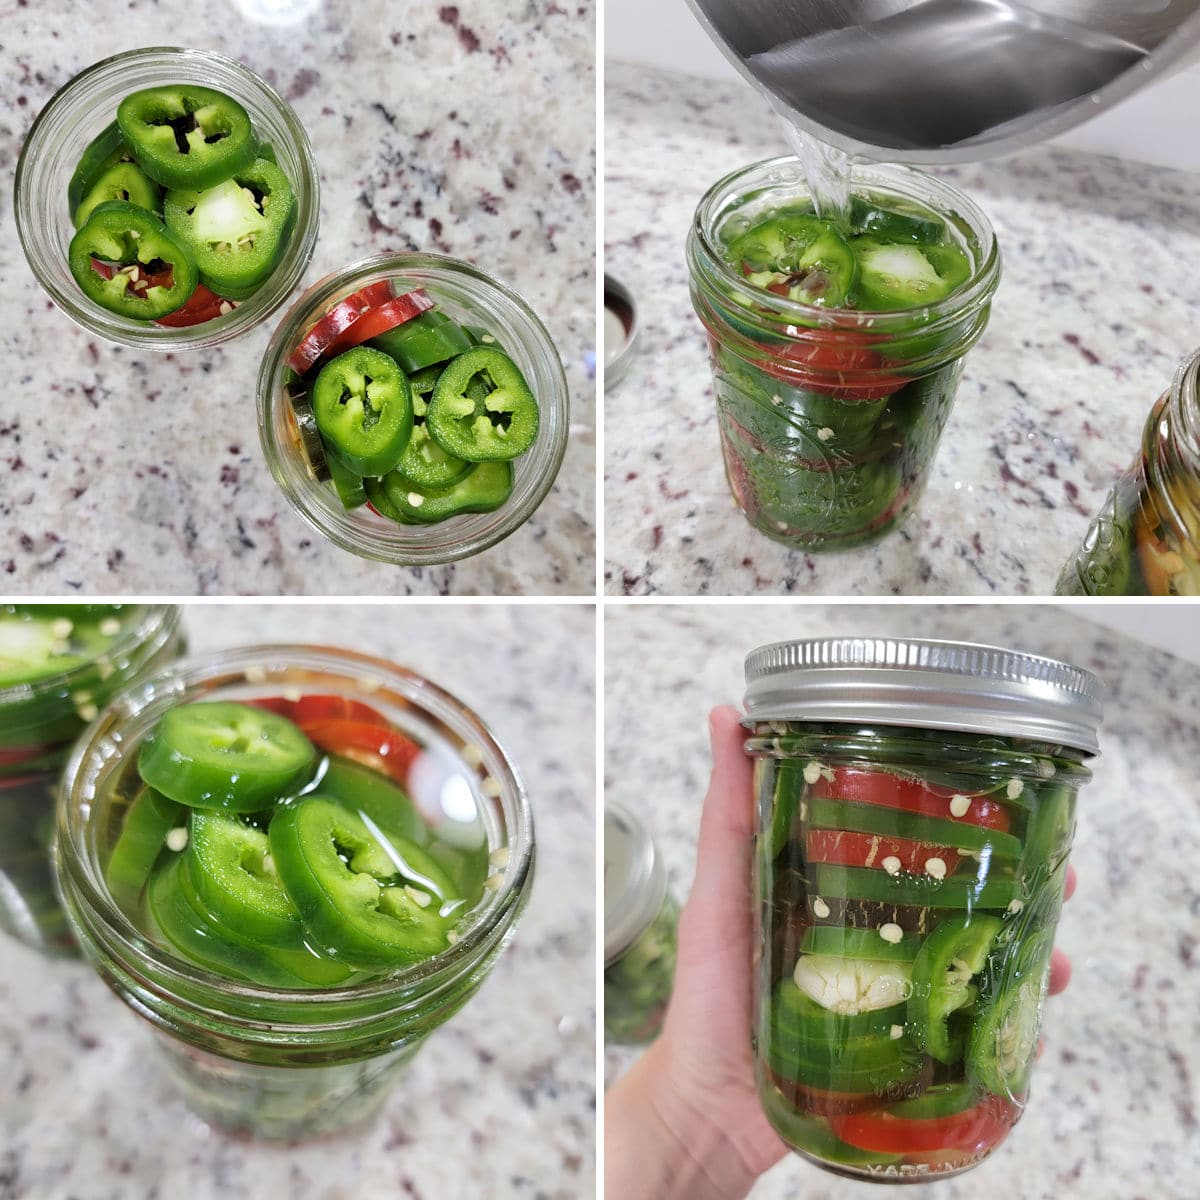 Preparing refrigerator pickled jalapenos in two glass jars.